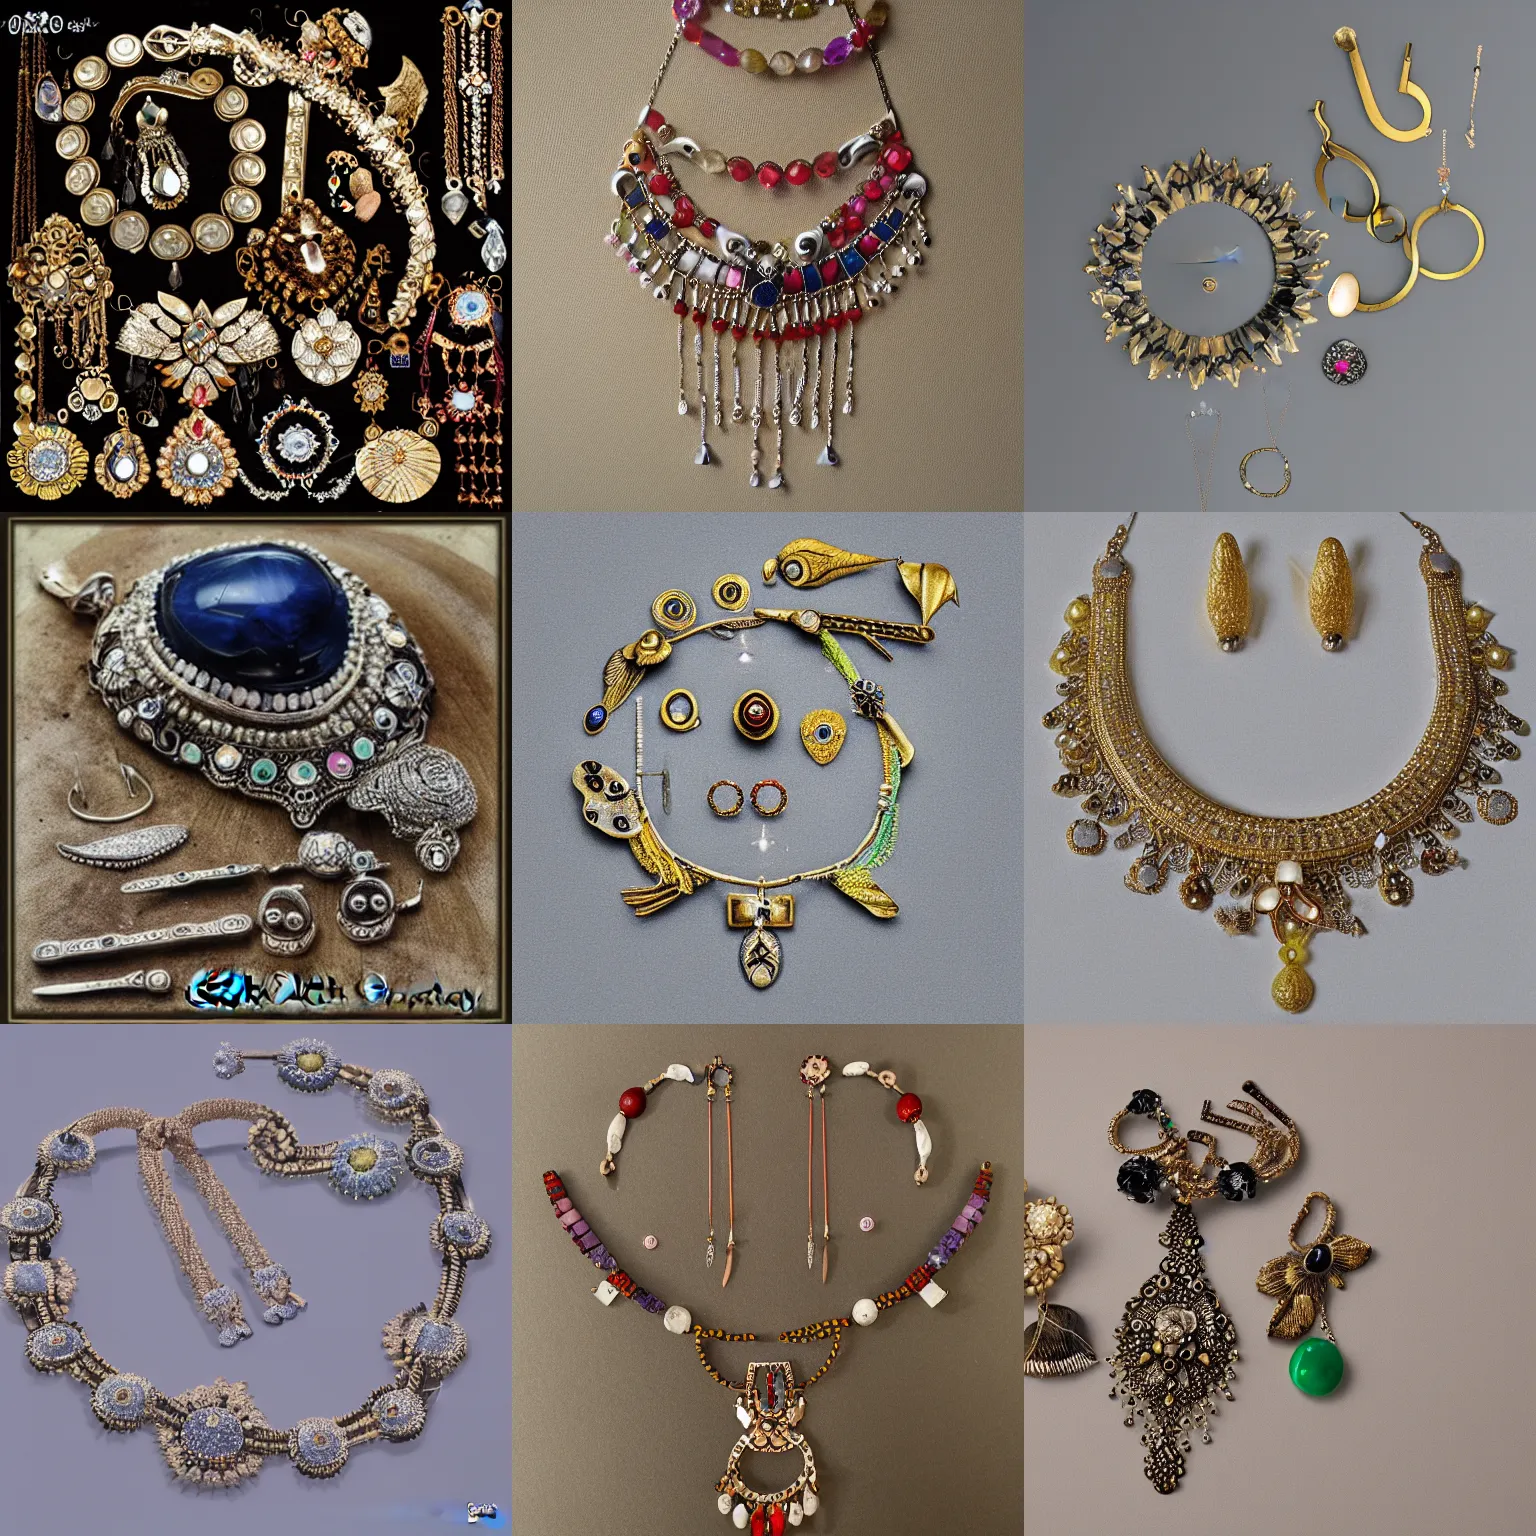 Prompt: Jewelery by Otto Jakob